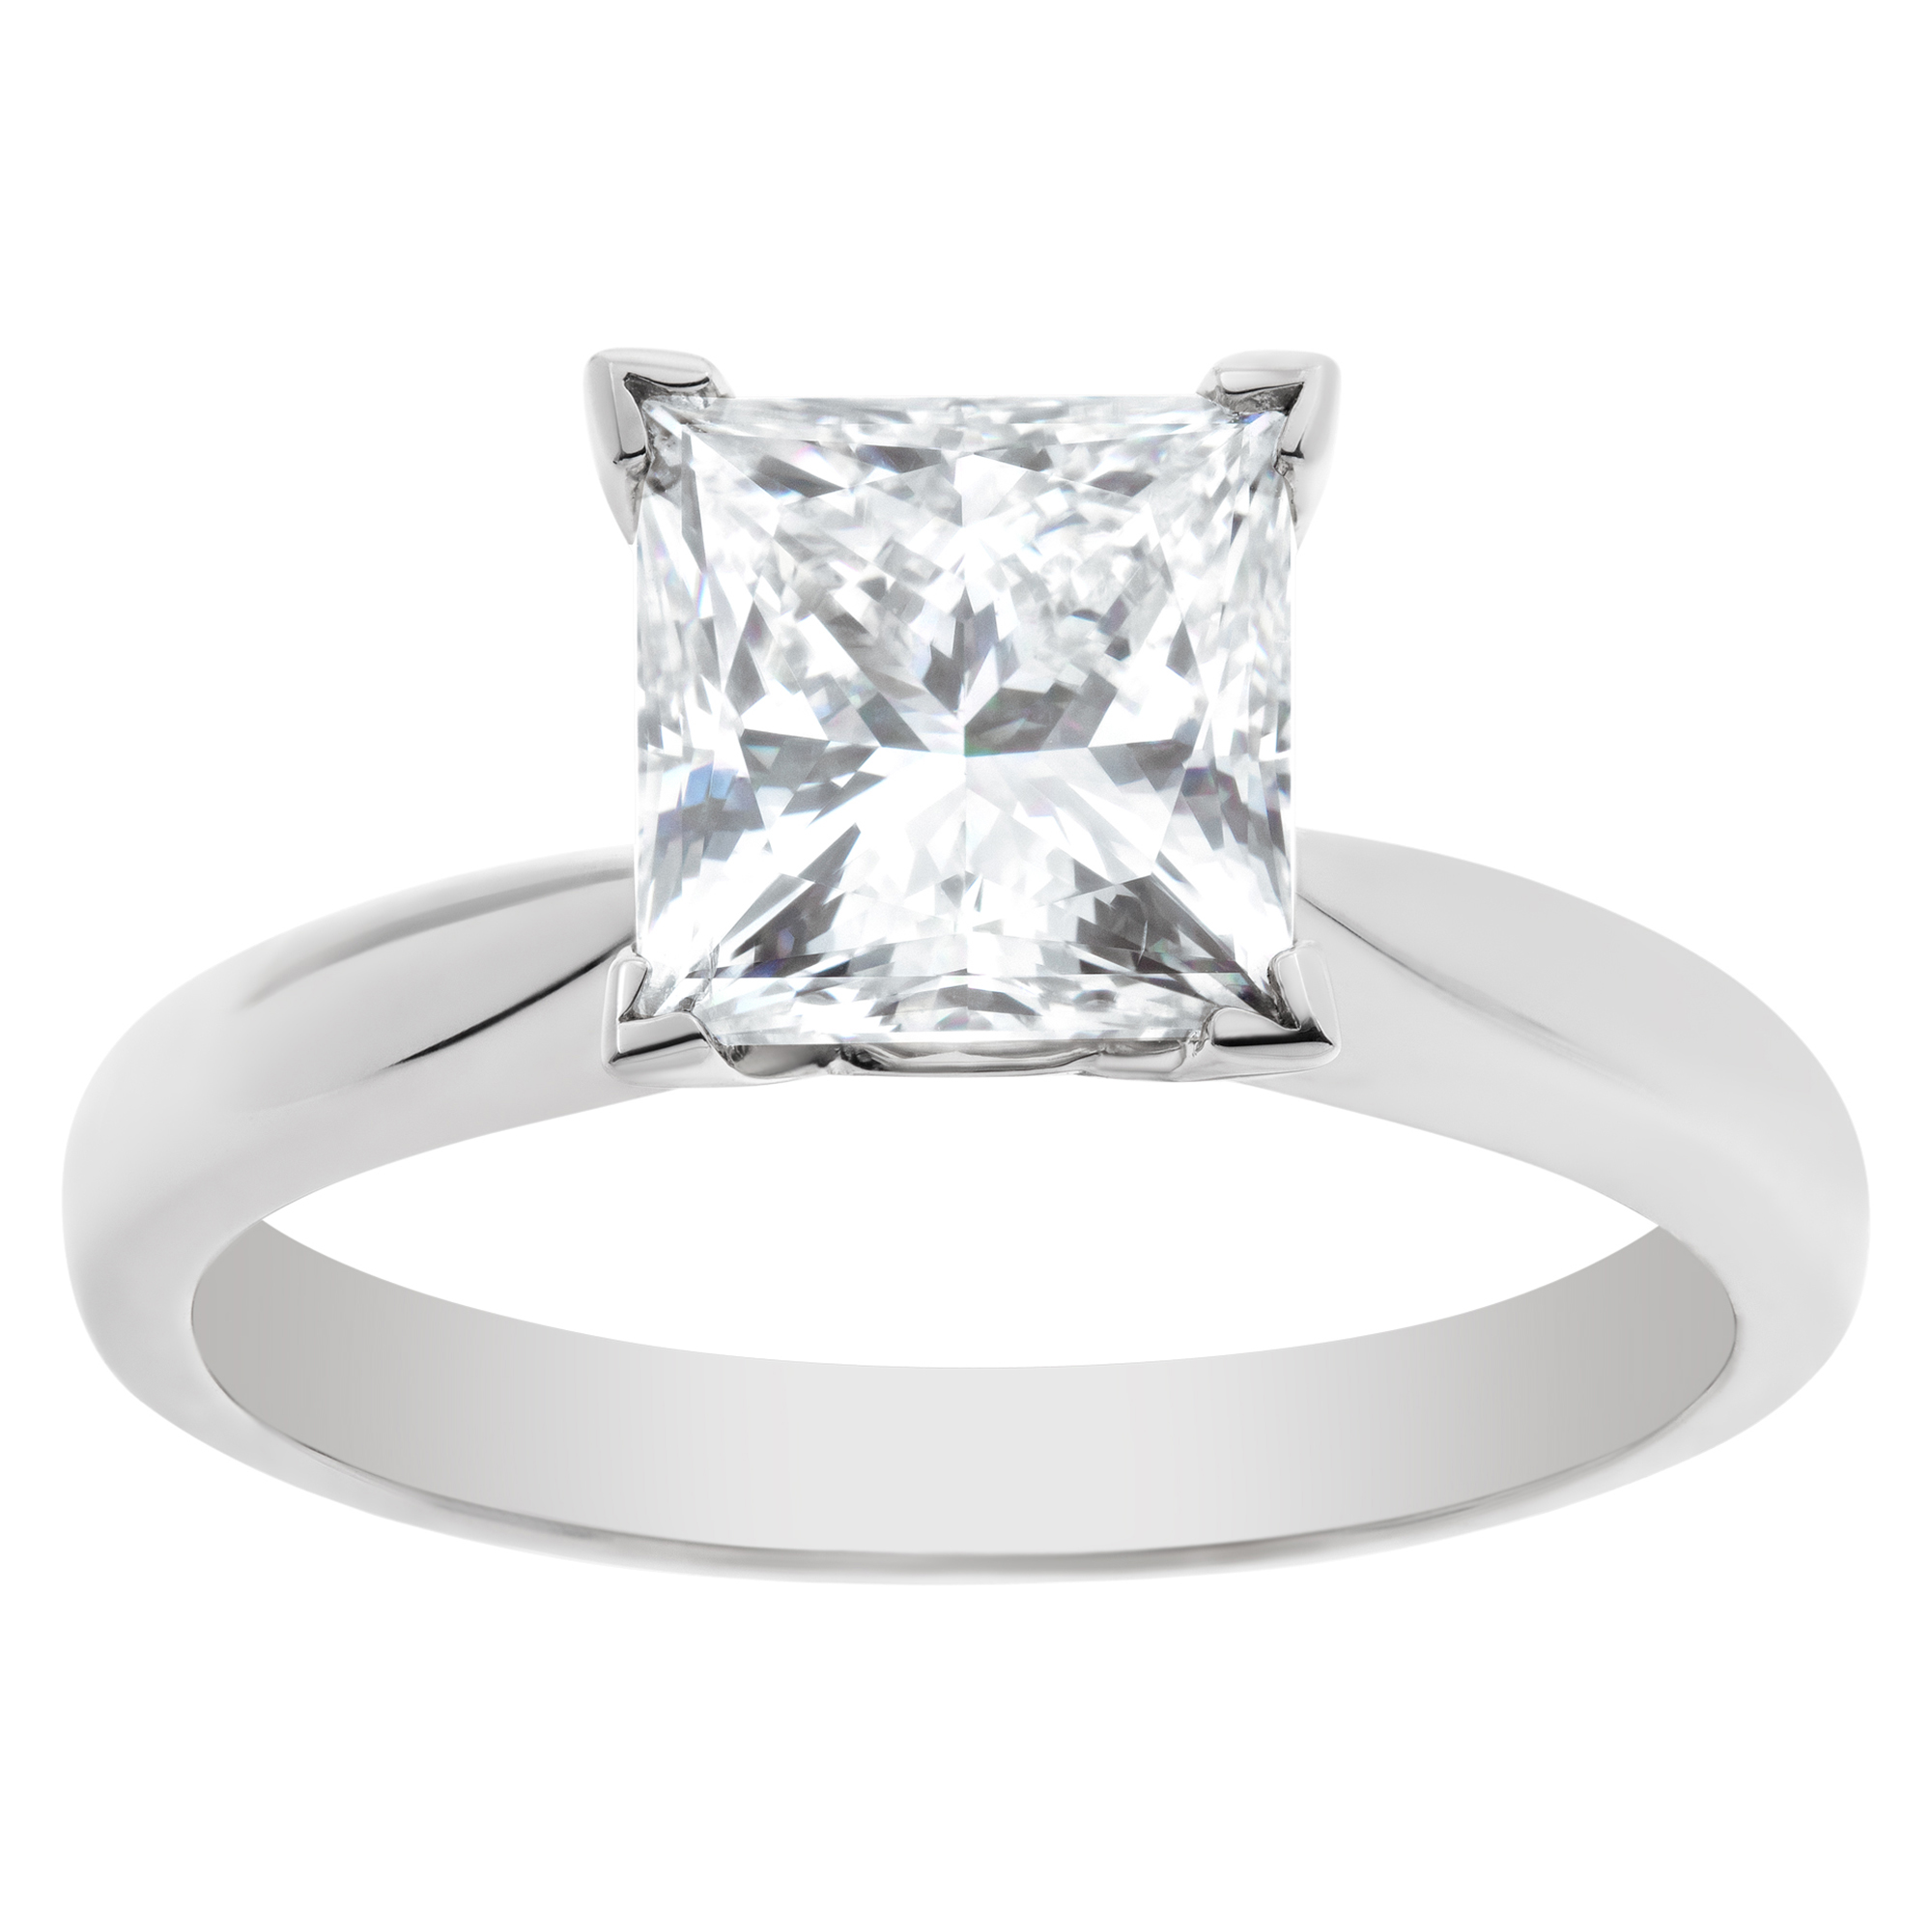 GIA certified princess cut diamond 2.09 carat (J color, SI1 clarity) ring image 1